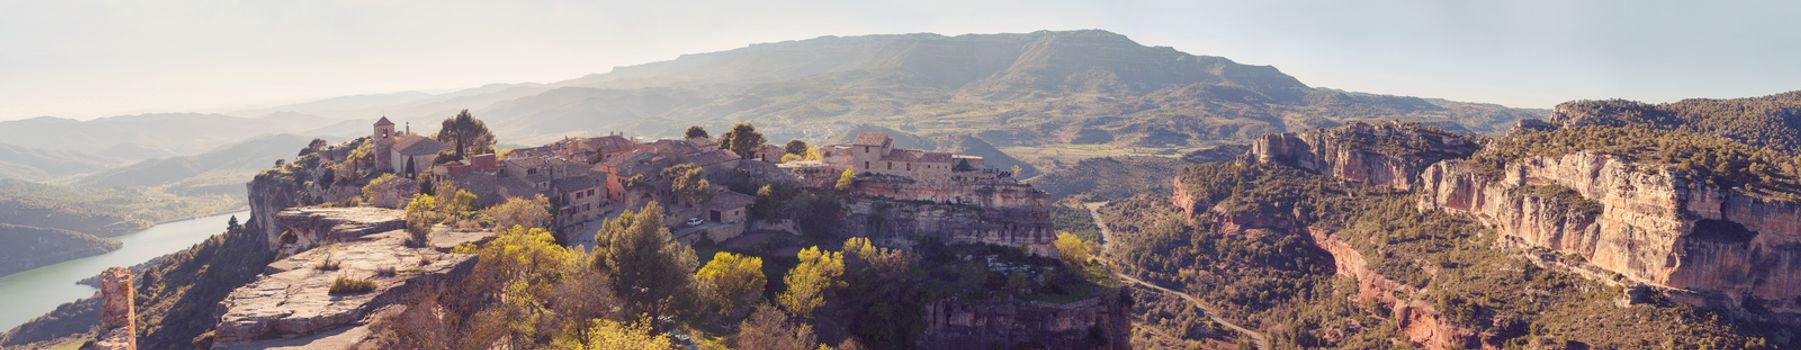 Siurana village in the province of Tarragona (Spain)